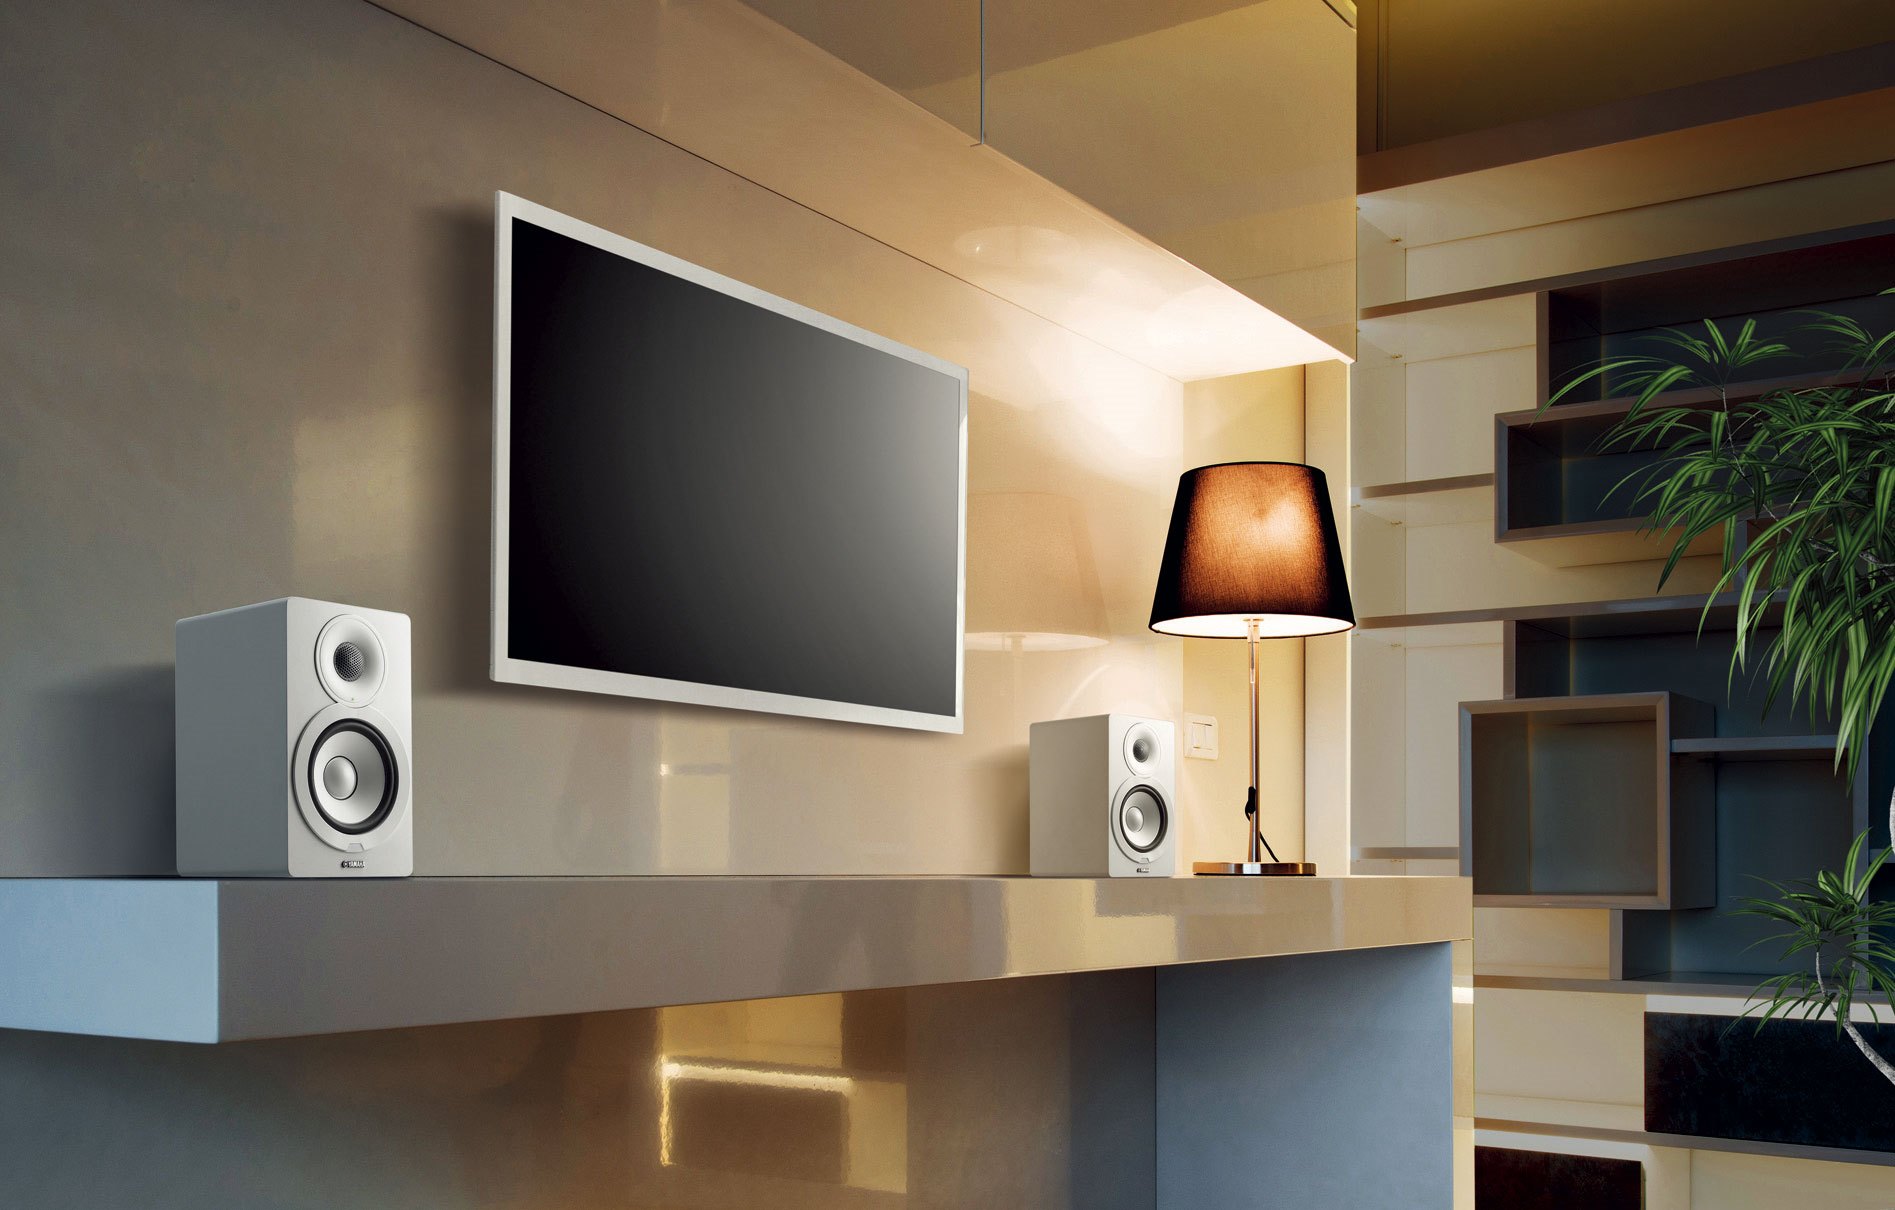 NX-N500 - Downloads - Speakers - Audio & Visual - Products 